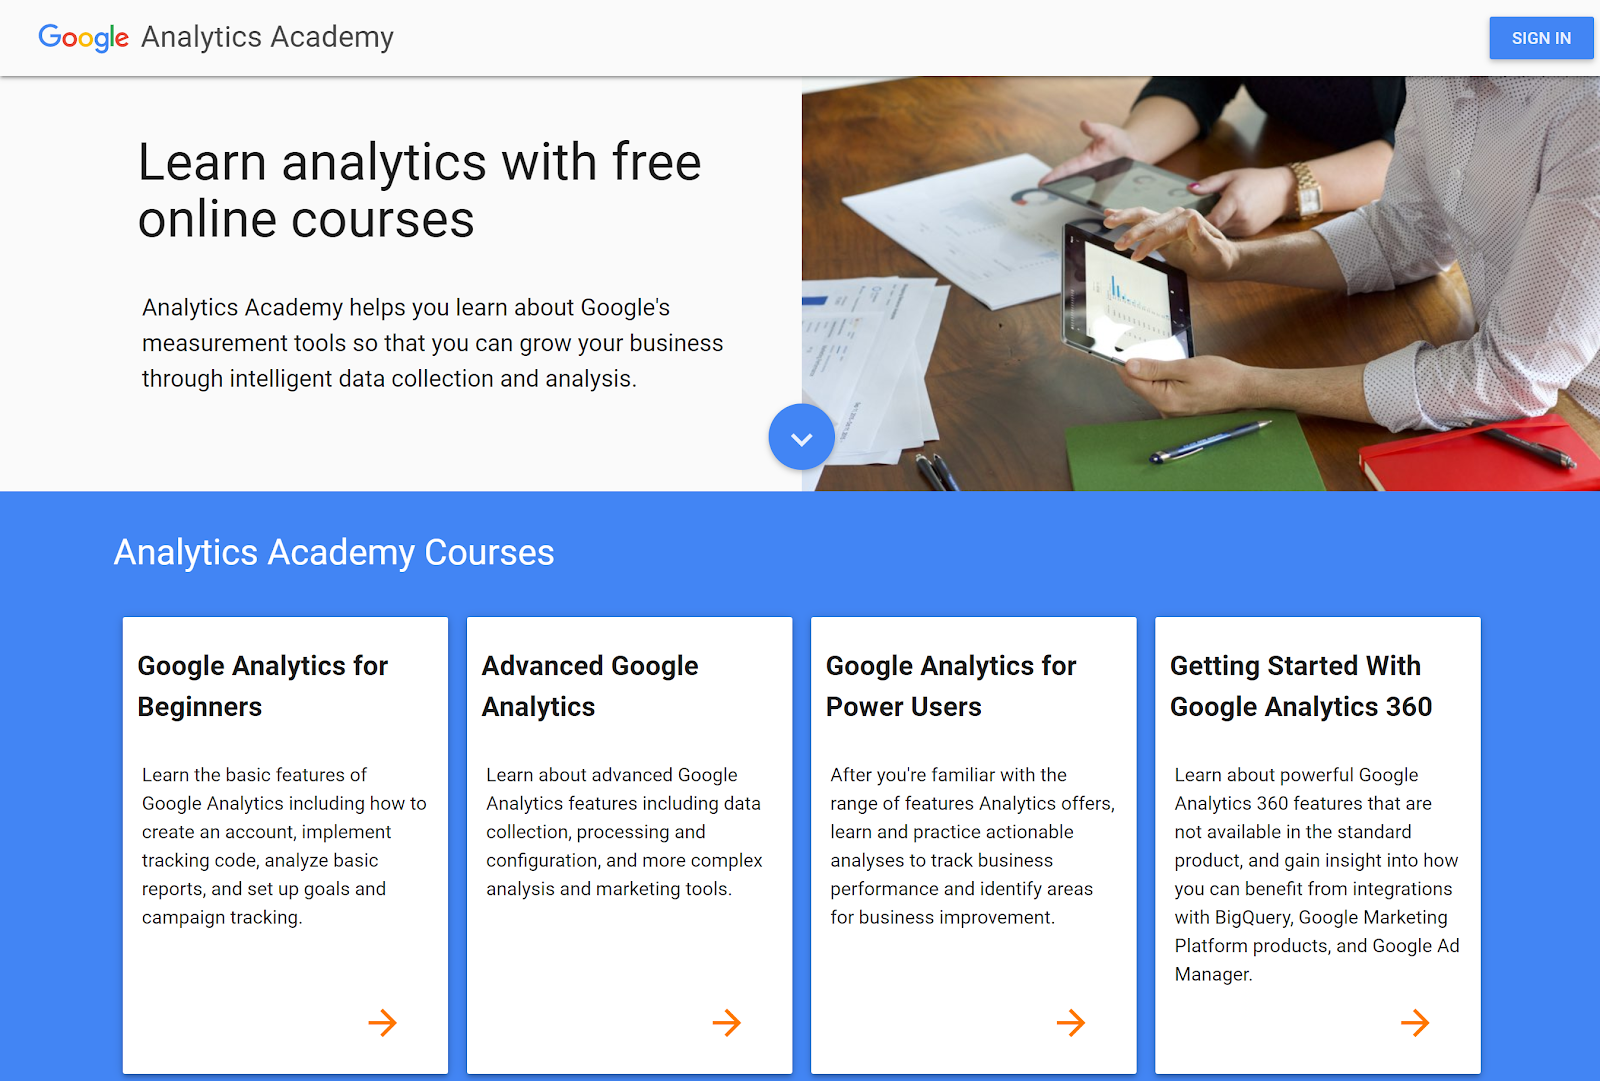 google-analytics-certification